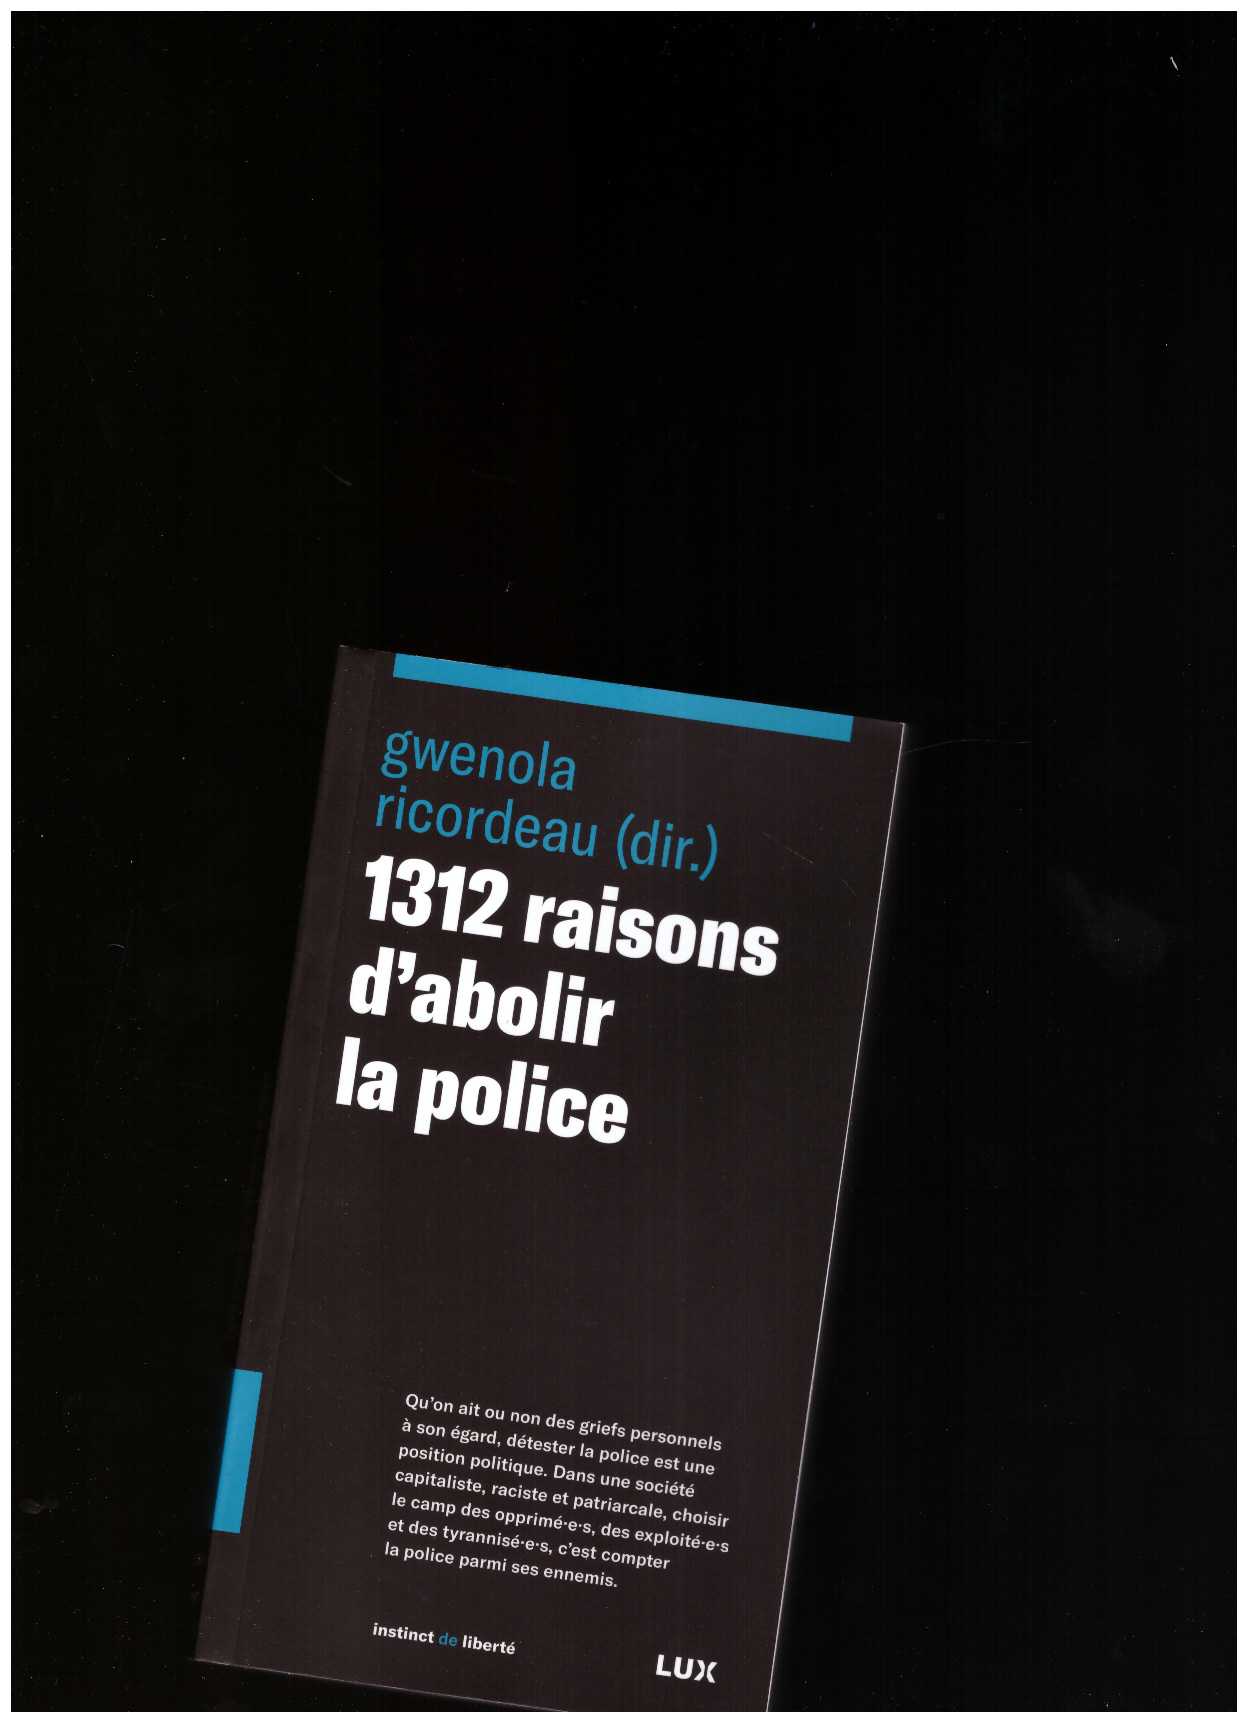 RICORDEAU, Gwenola (ed.) - 1312 raisons d’abolir la police